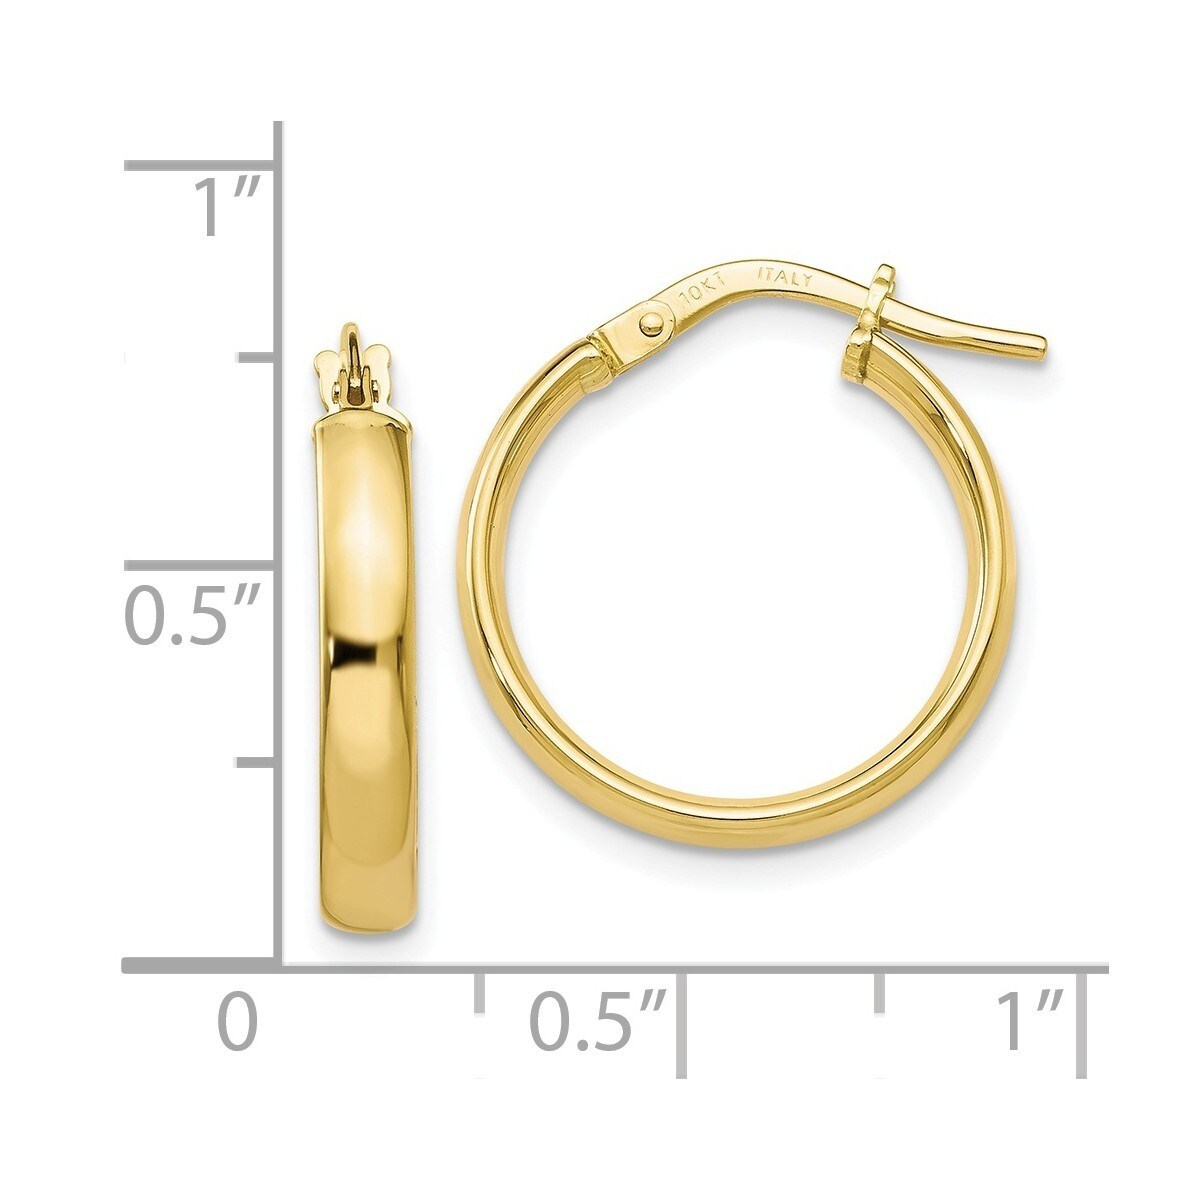 10 Karat Gold Polished Hoop Earrings By Versil On Sale Overstock